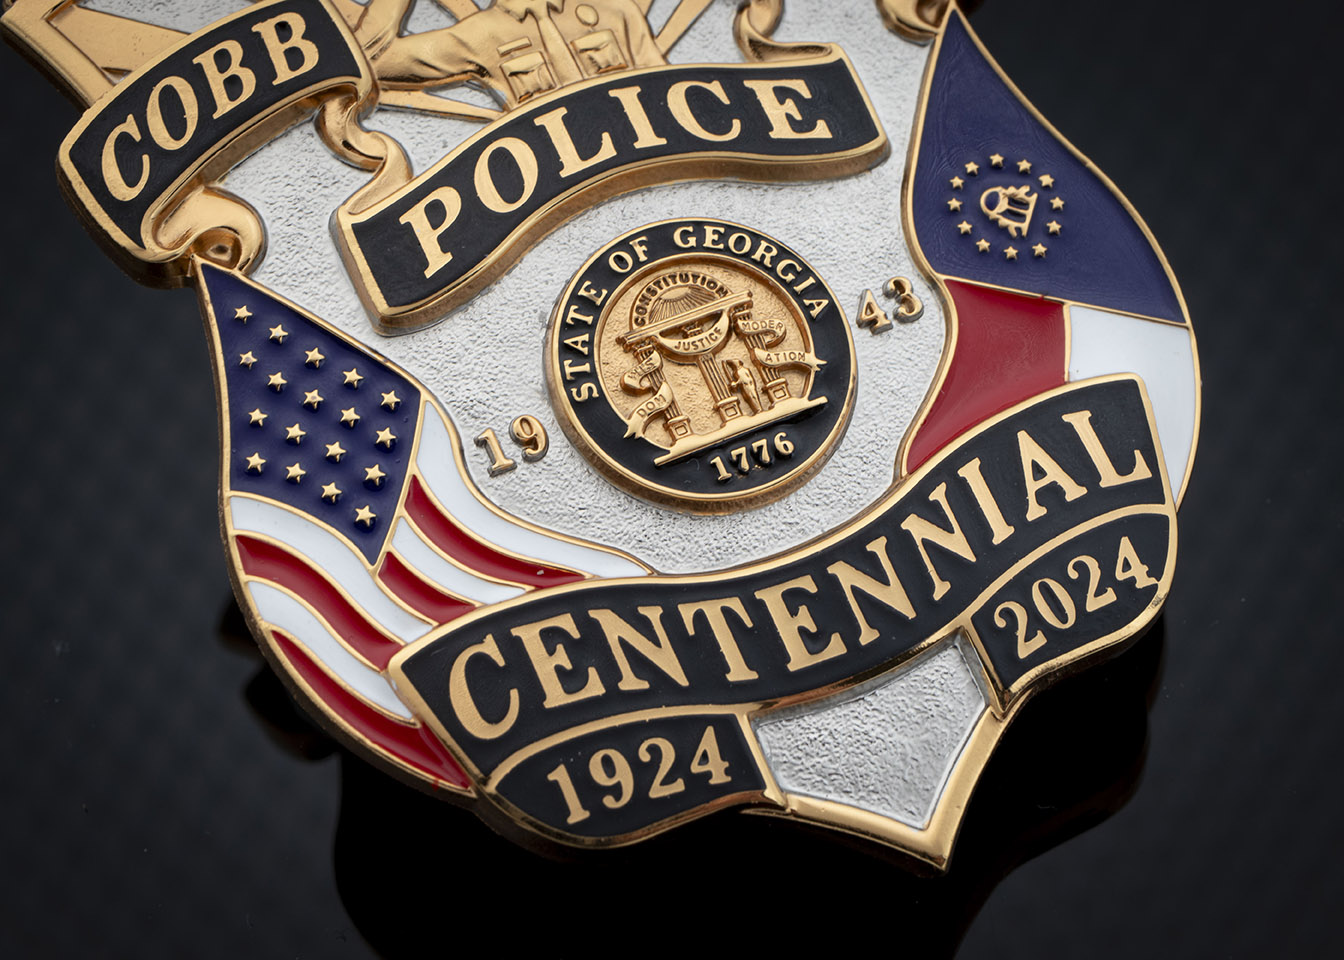 Cobb county police badge close up of centennial